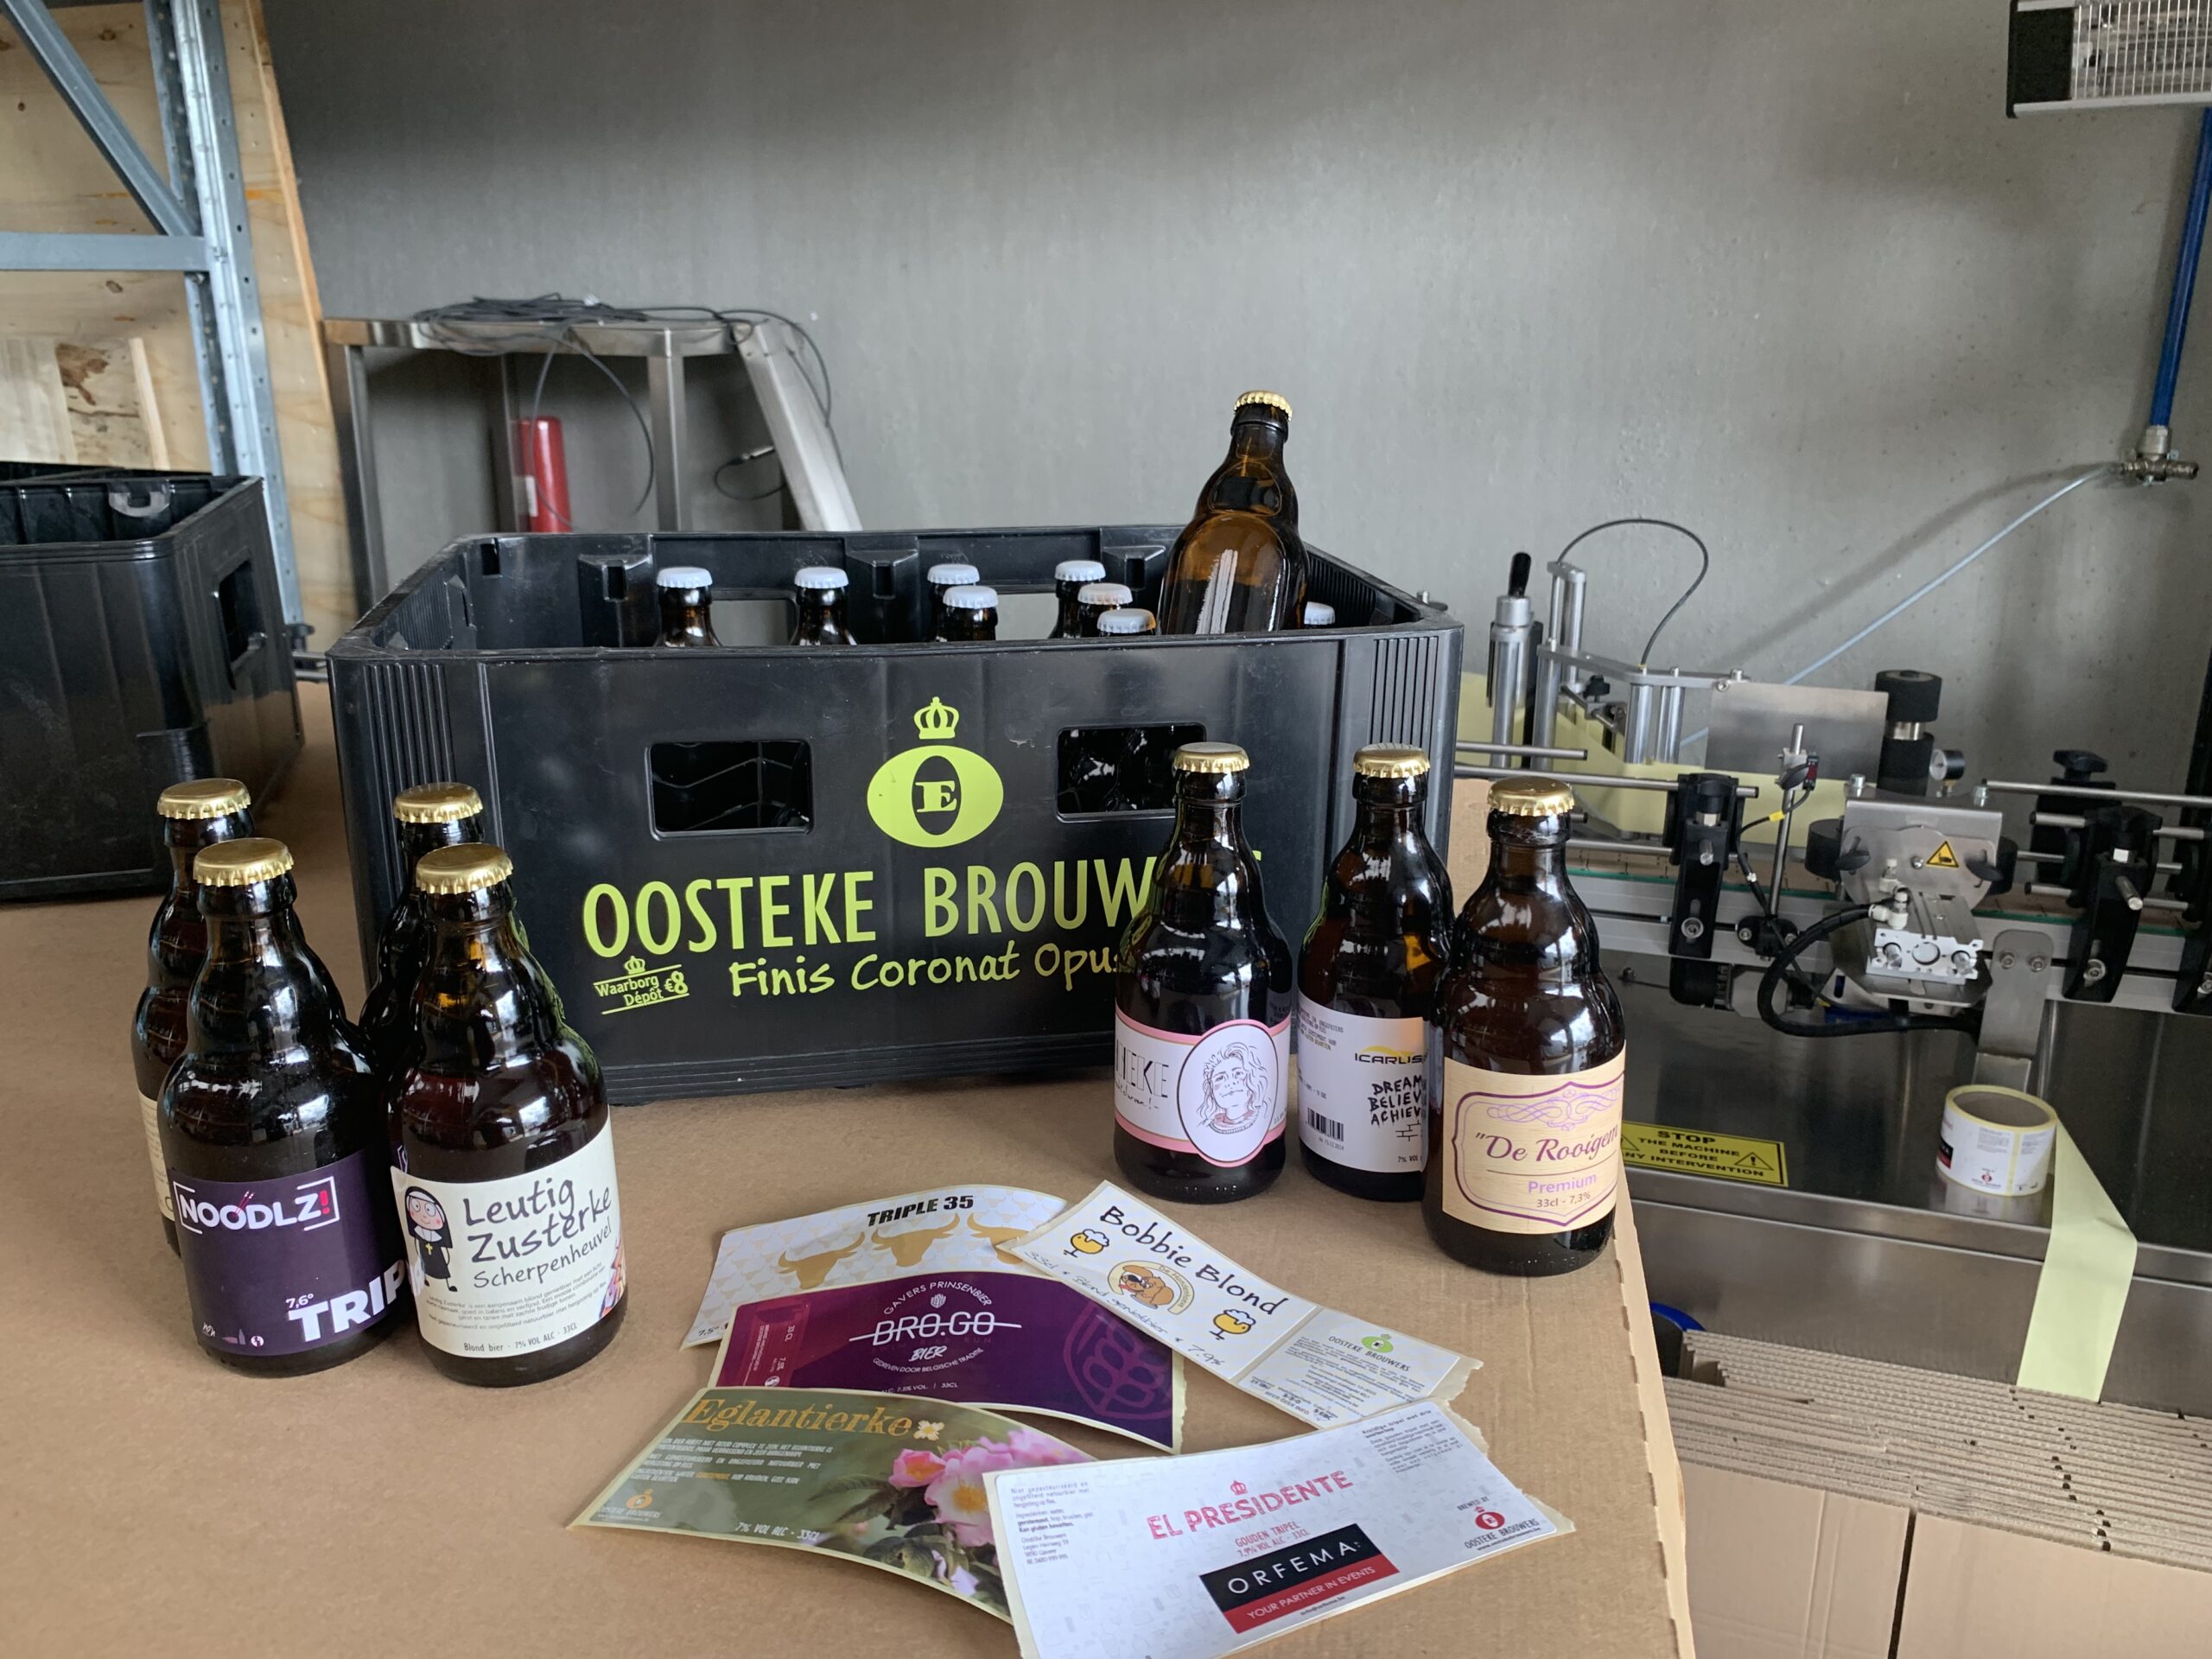 Oosteke-brouwers eigen ontwerp bieretiketten bier personaliseren